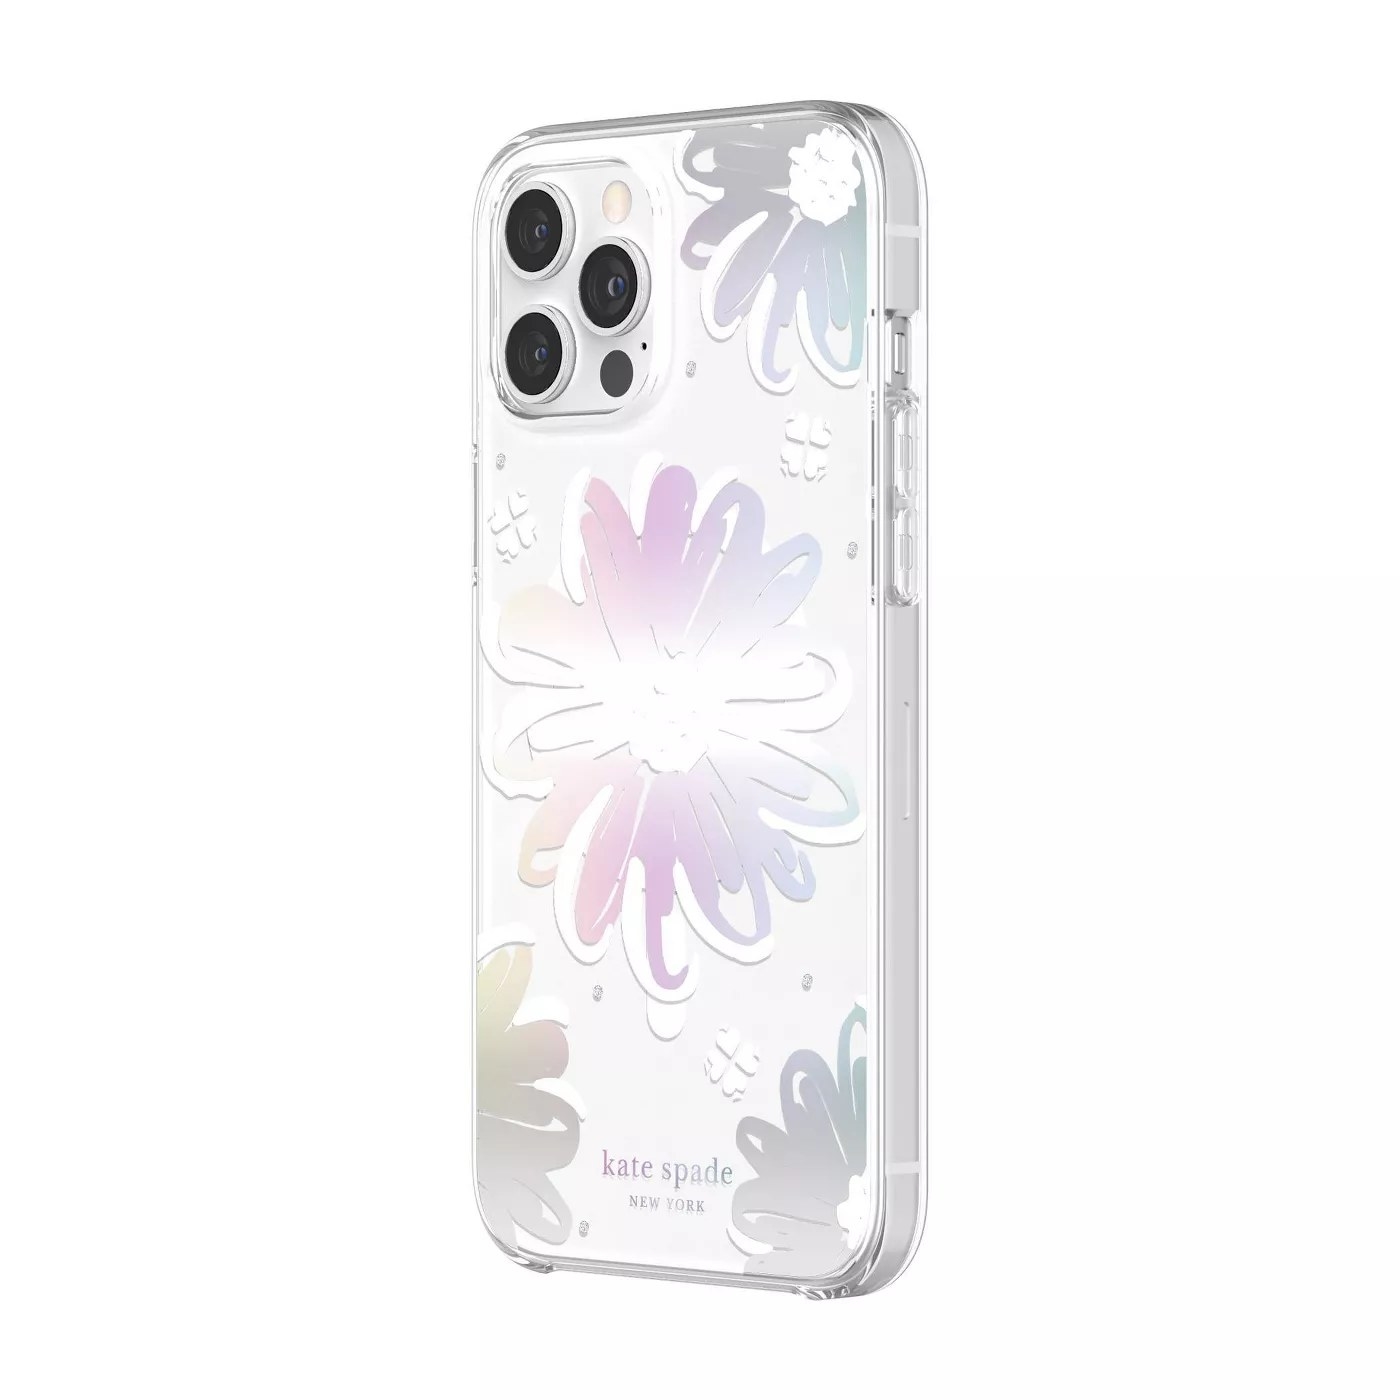 The Kate Spade daisy iridescent phone case